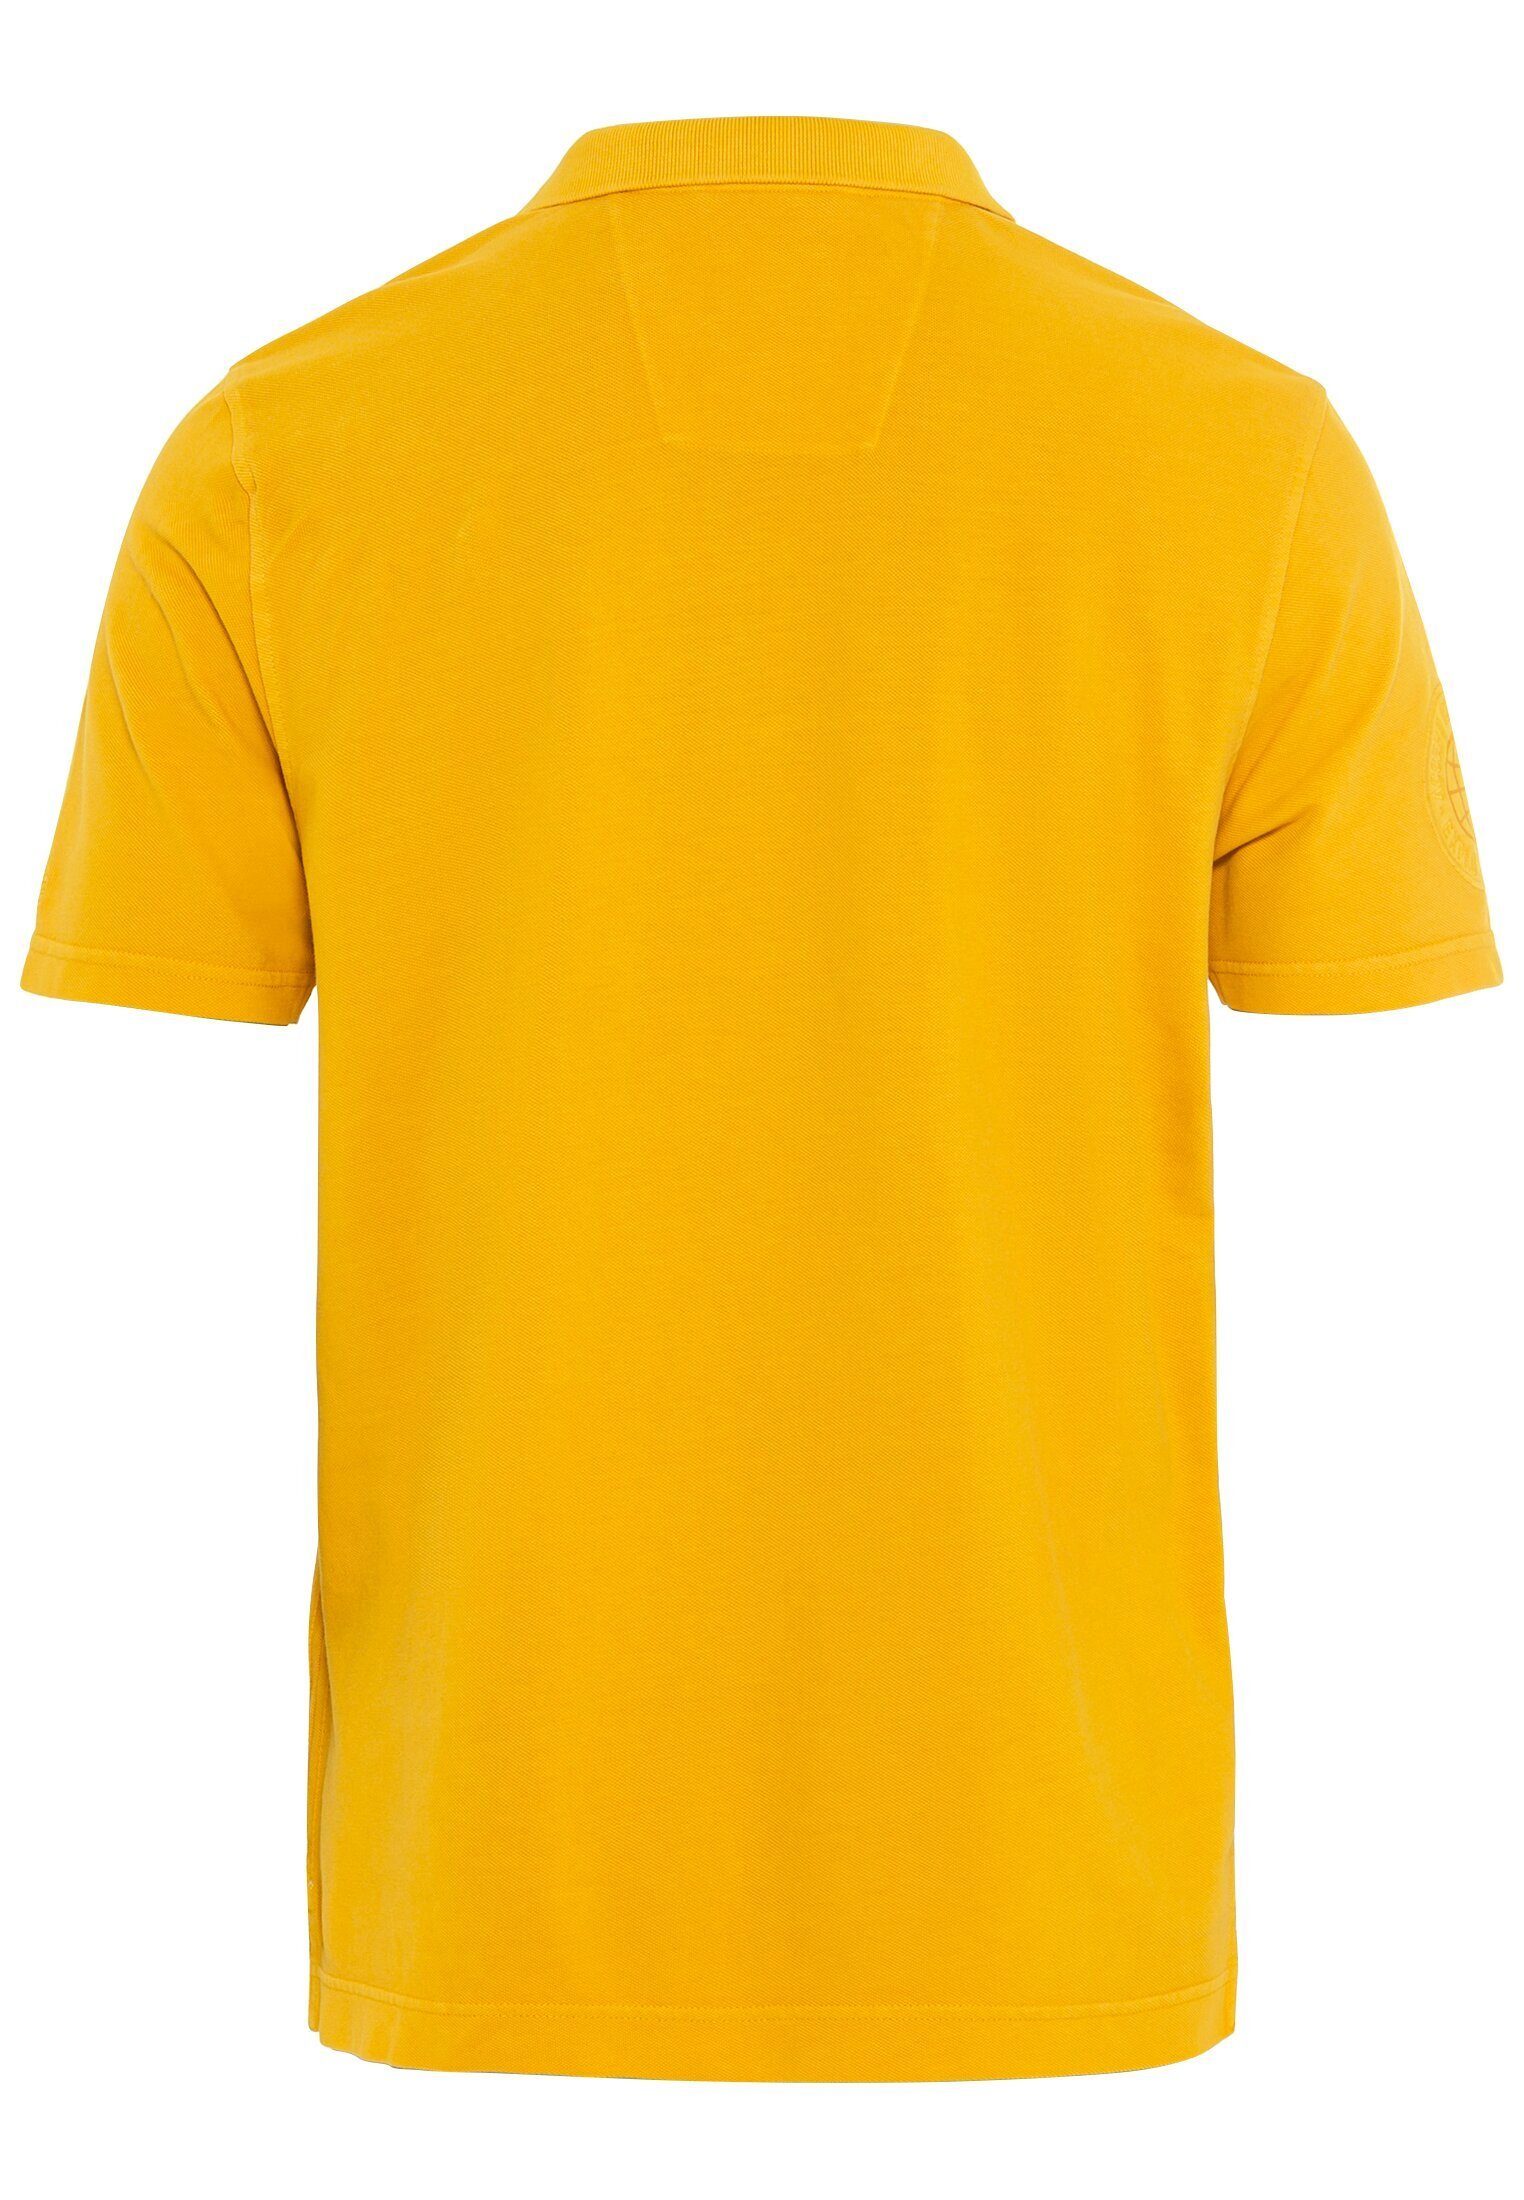 active camel Poloshirt Gelb Baumwolle aus Shirts_Poloshirt